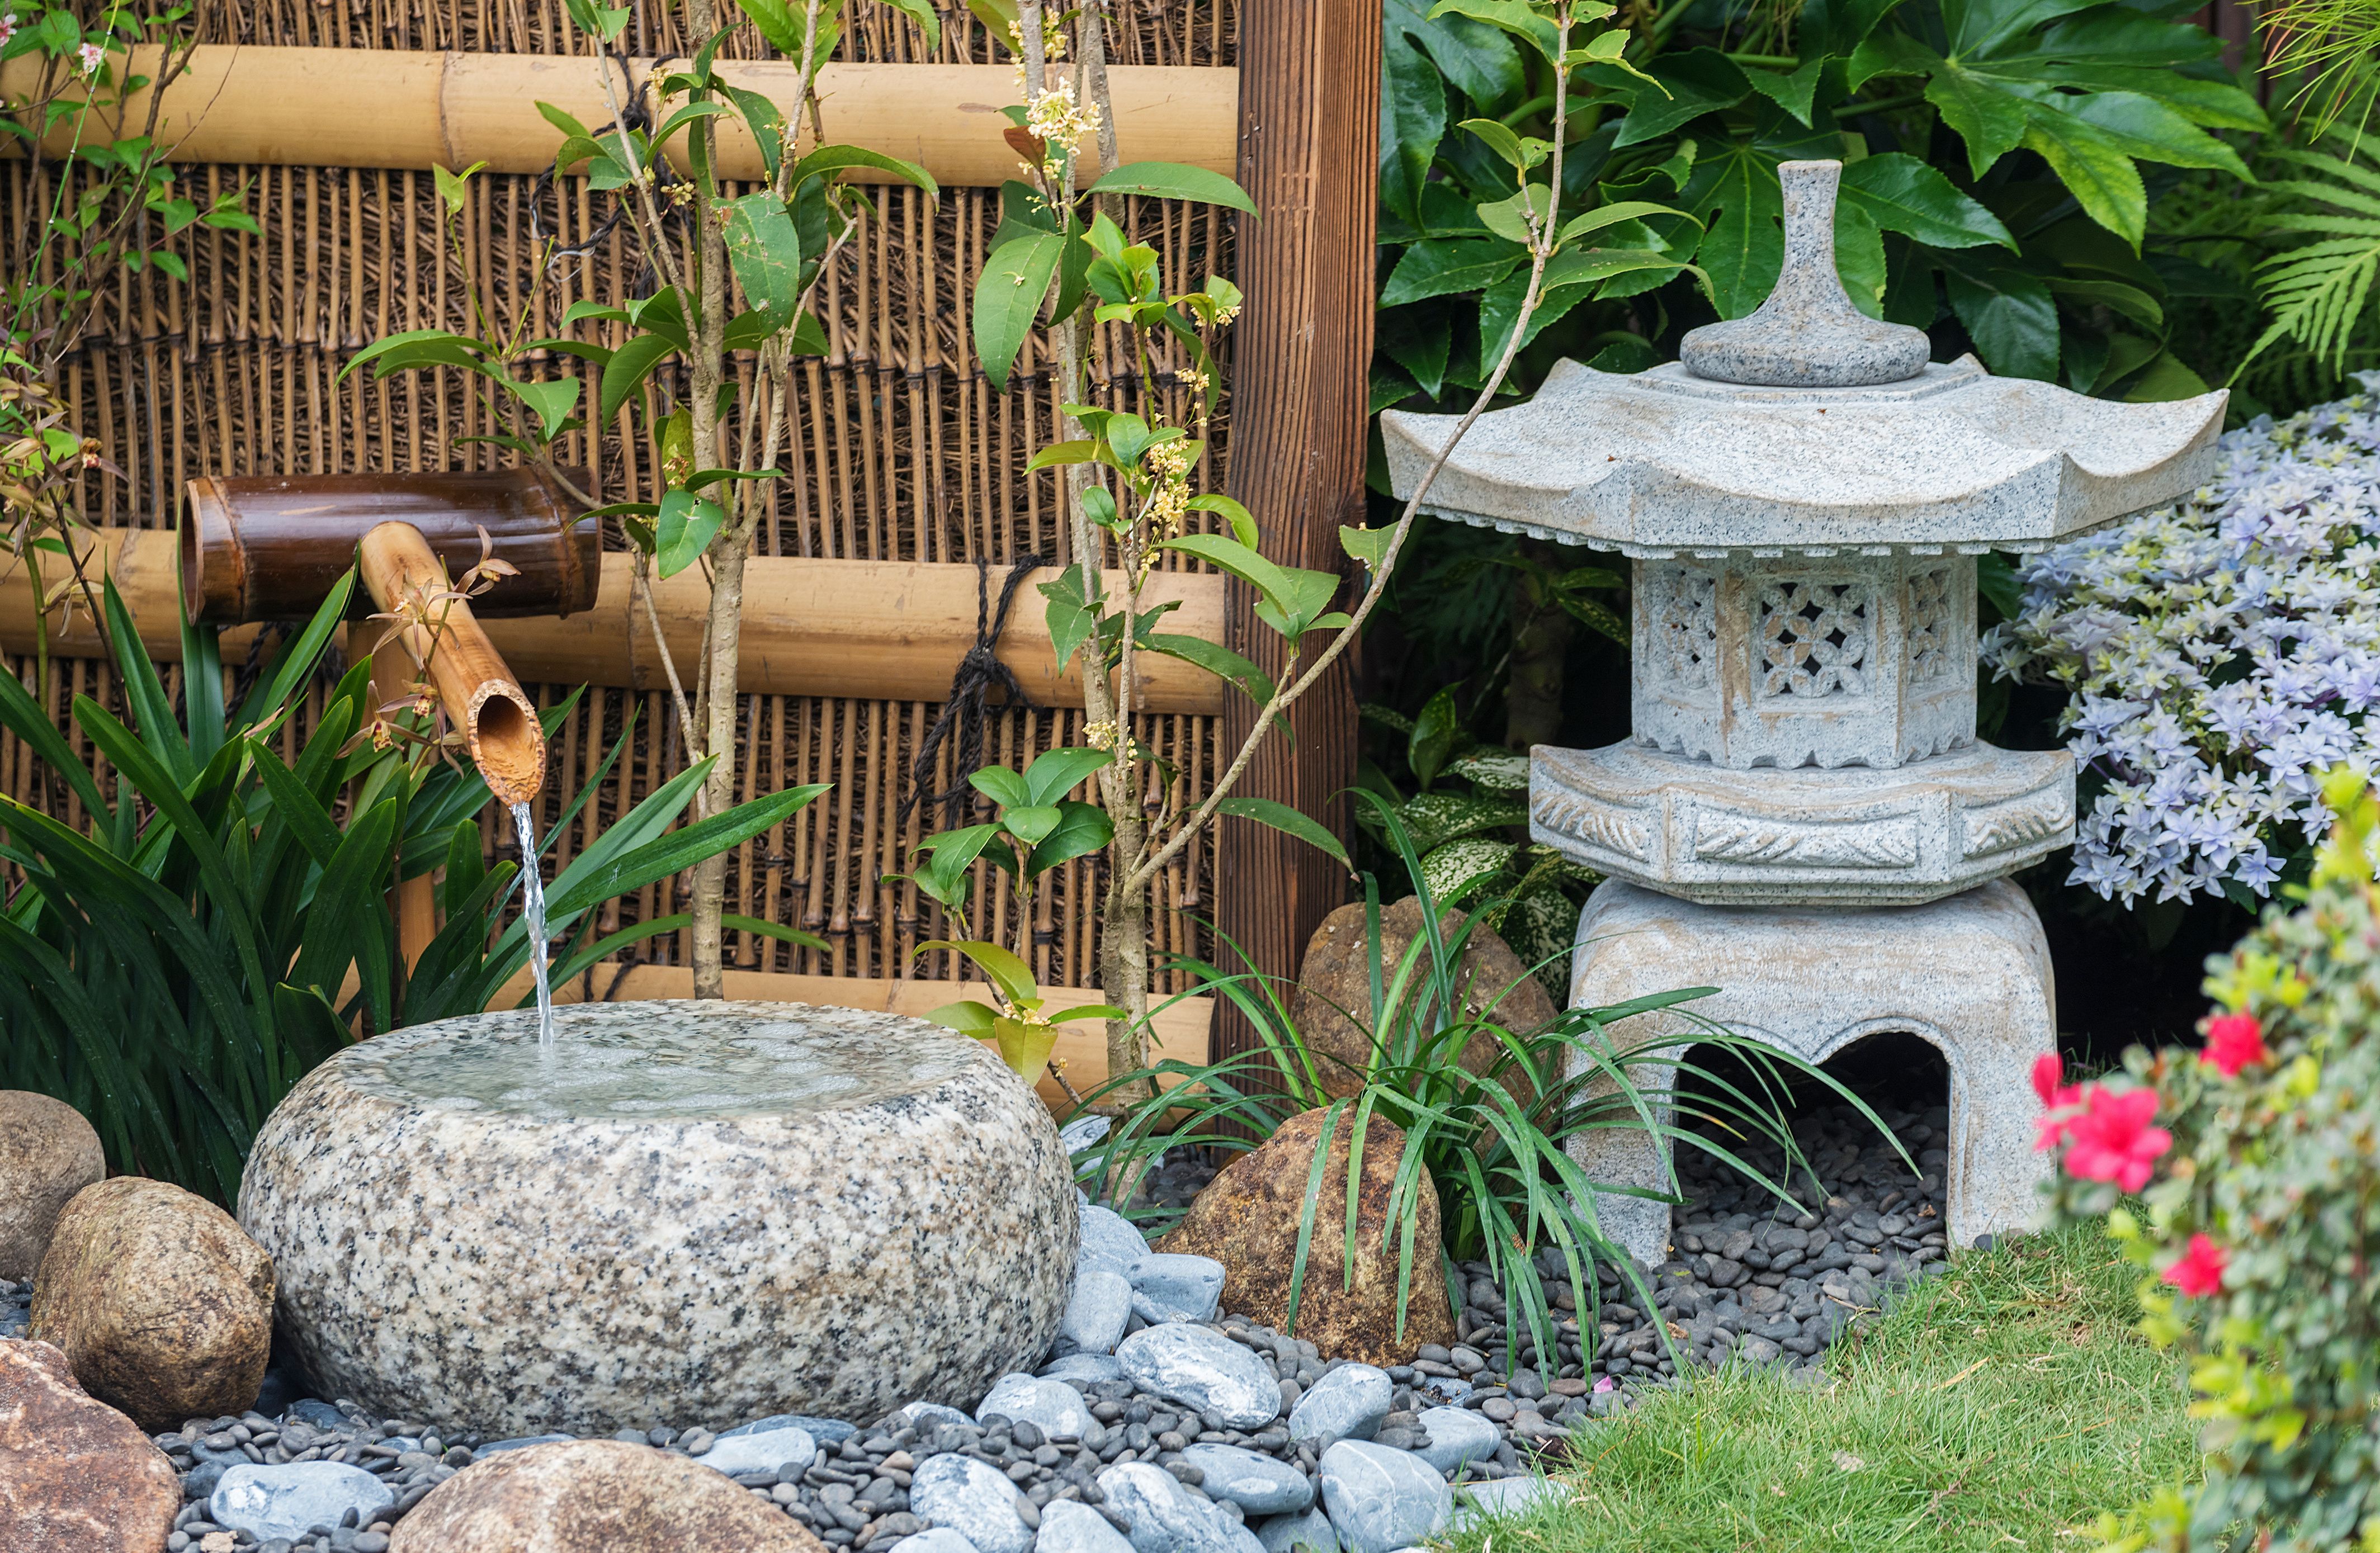 bamboo water feature next to a bamboo screen are a great zen garden ideas